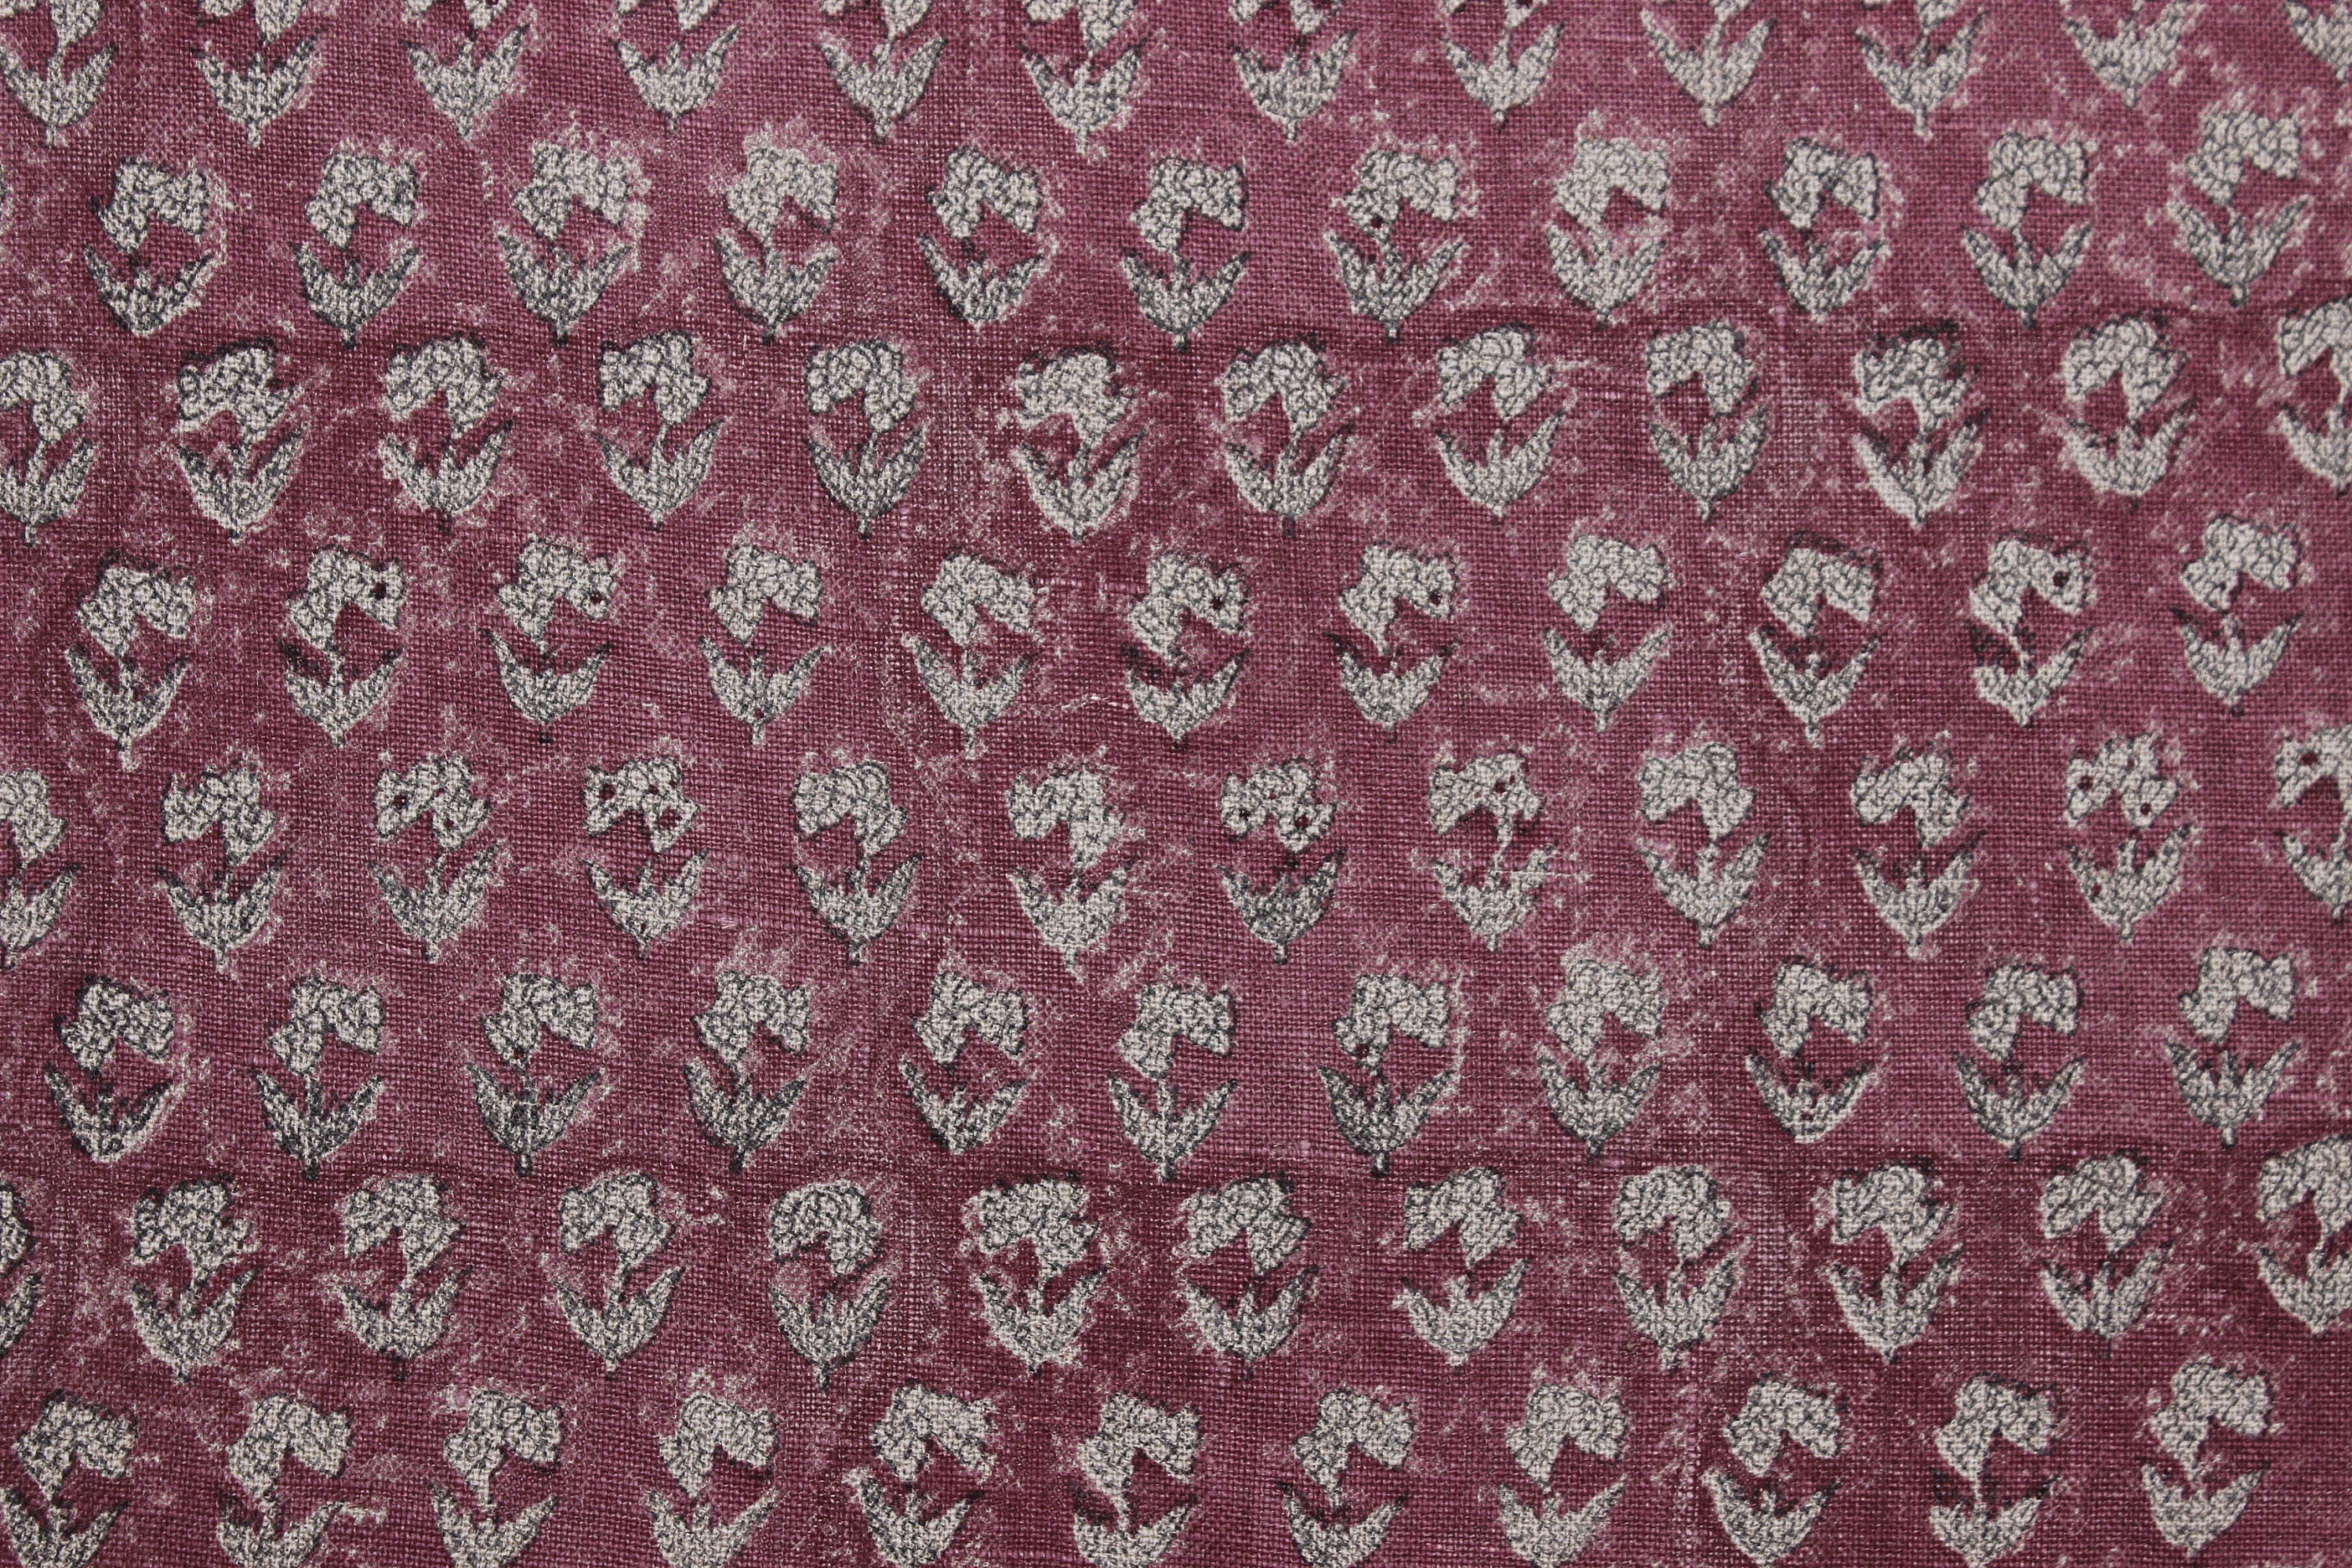 Block Print Linen Fabric, Superstar Pink Popular Floral Hand Block Print Fabric  Thick Linen 58"Inch Wide Heavy Weight 300 Gsm, Upholstery,Indian Art Print Fabric